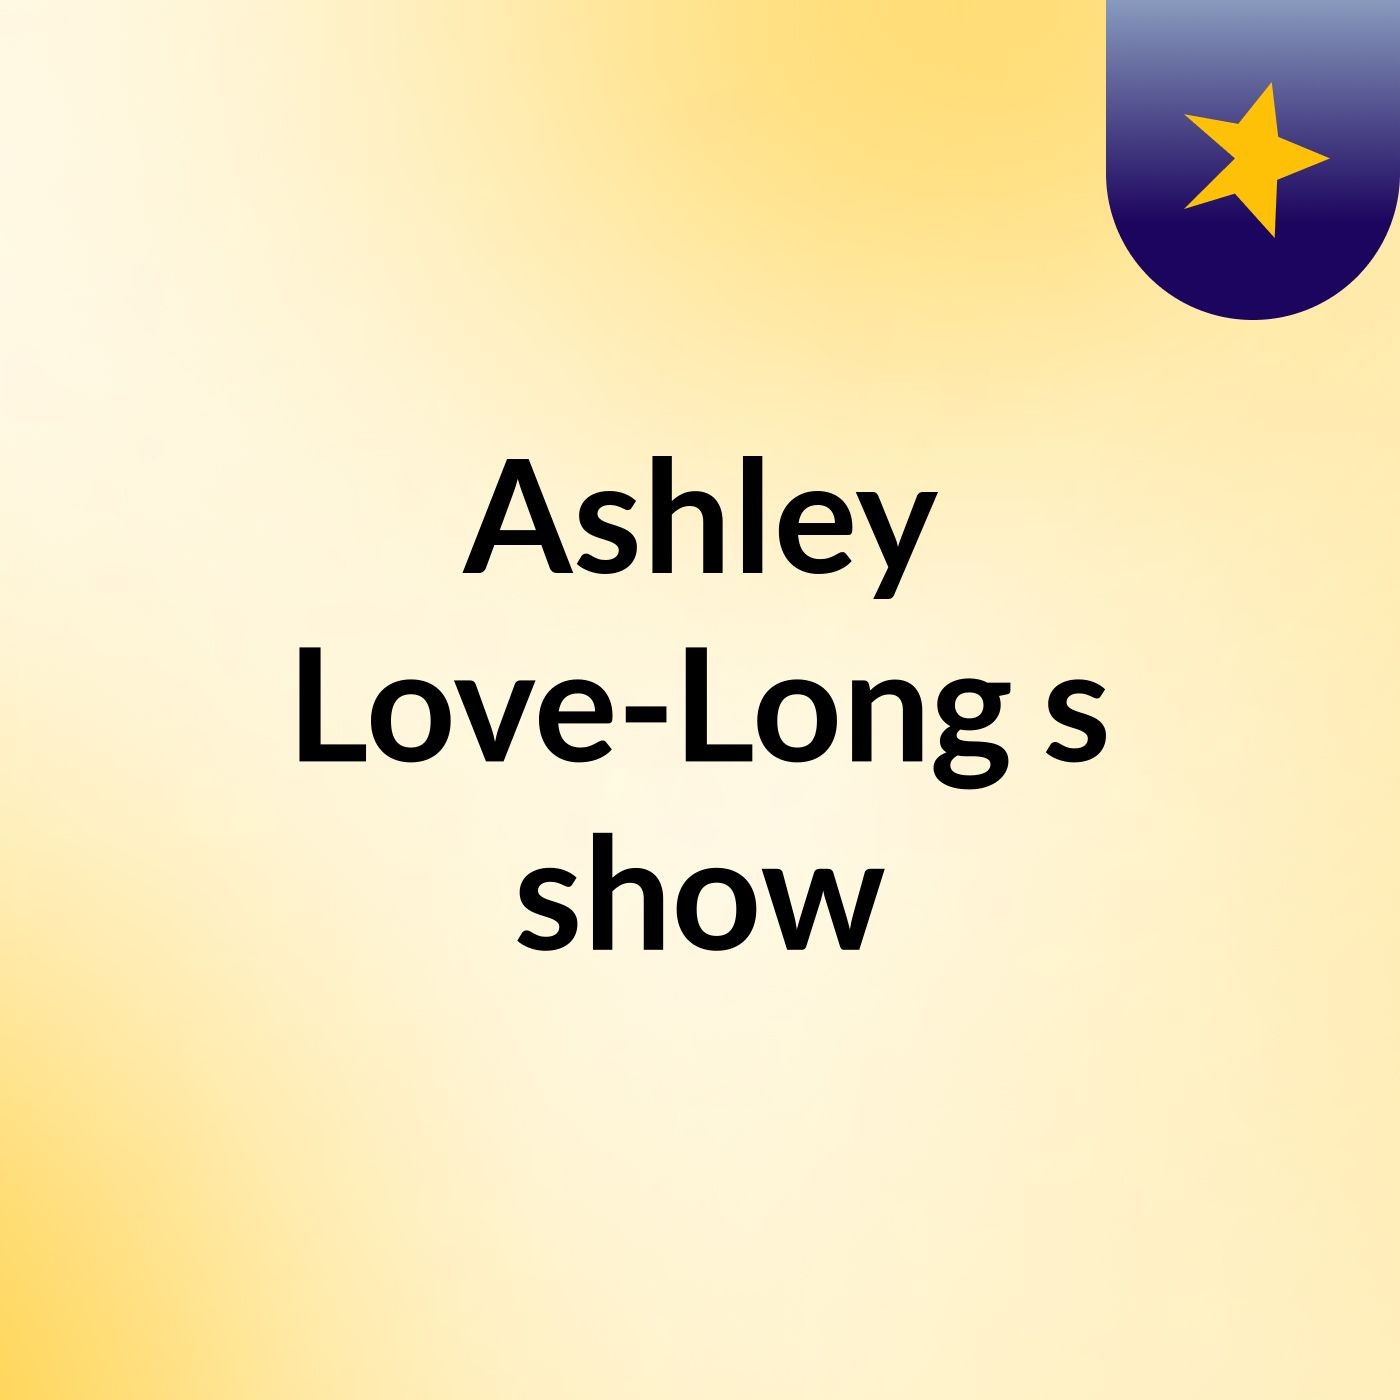 Ashley Love-Long's show